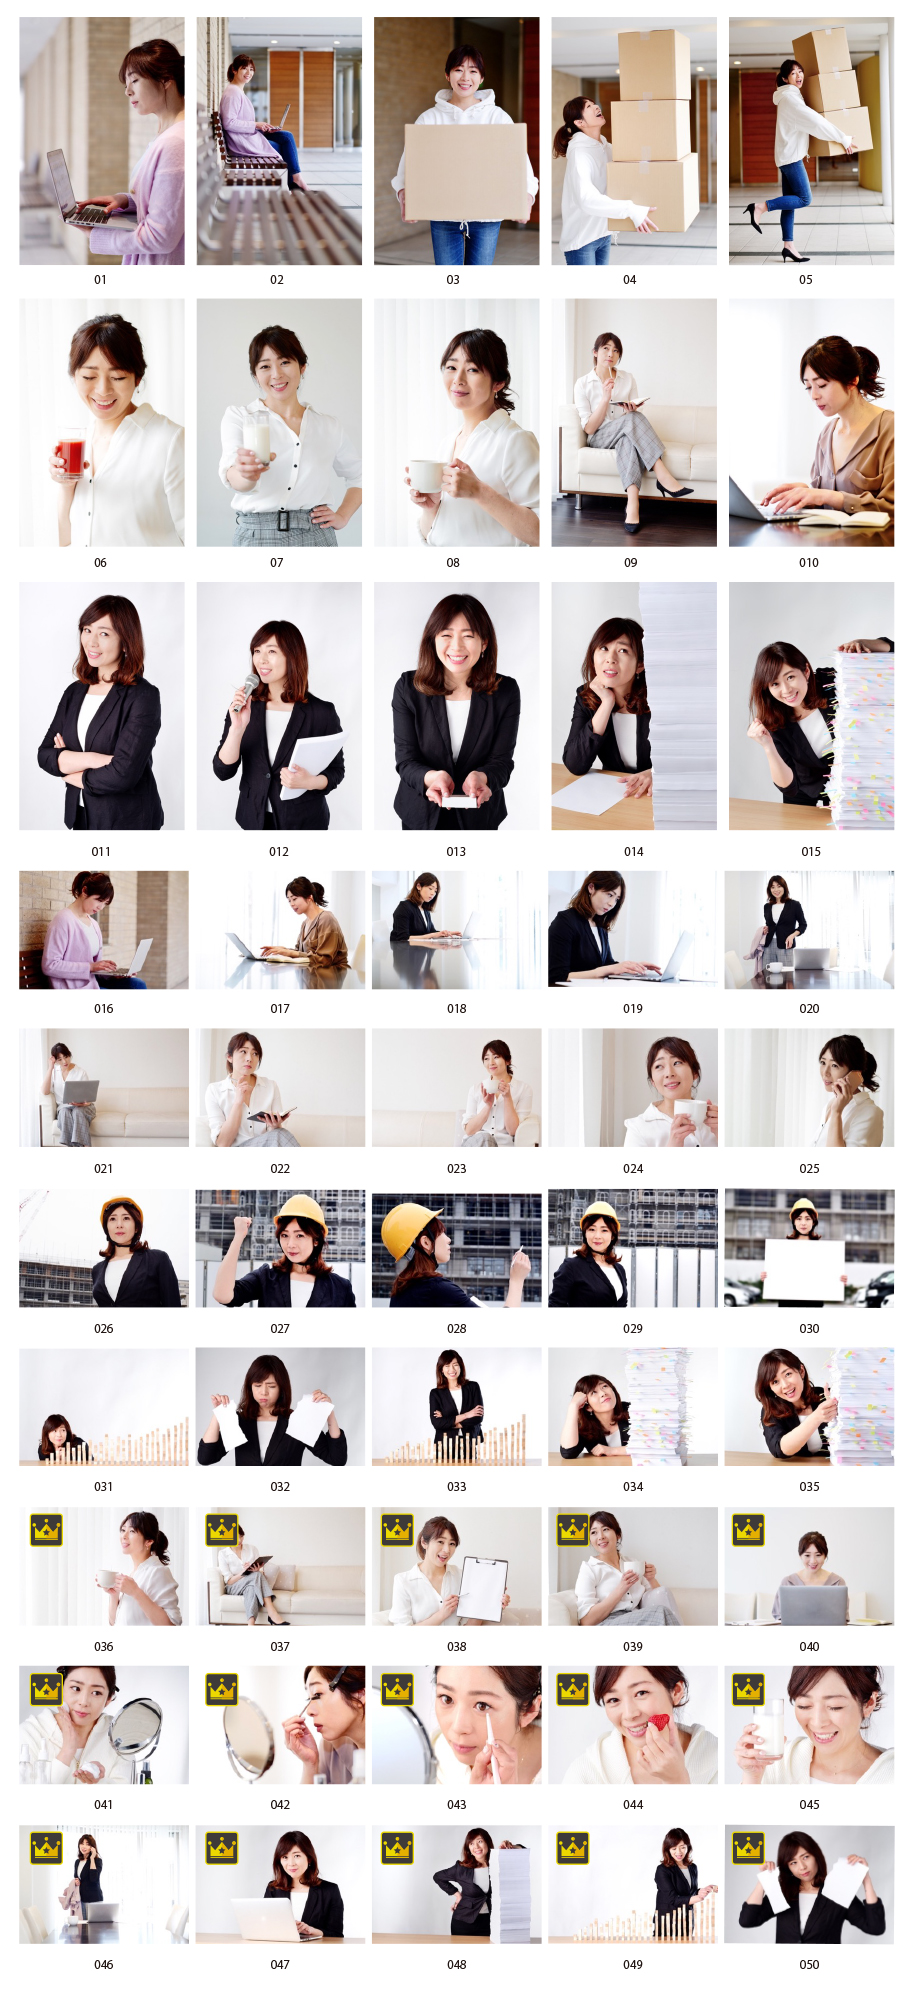 Cheerful female entrepreneur stock photos